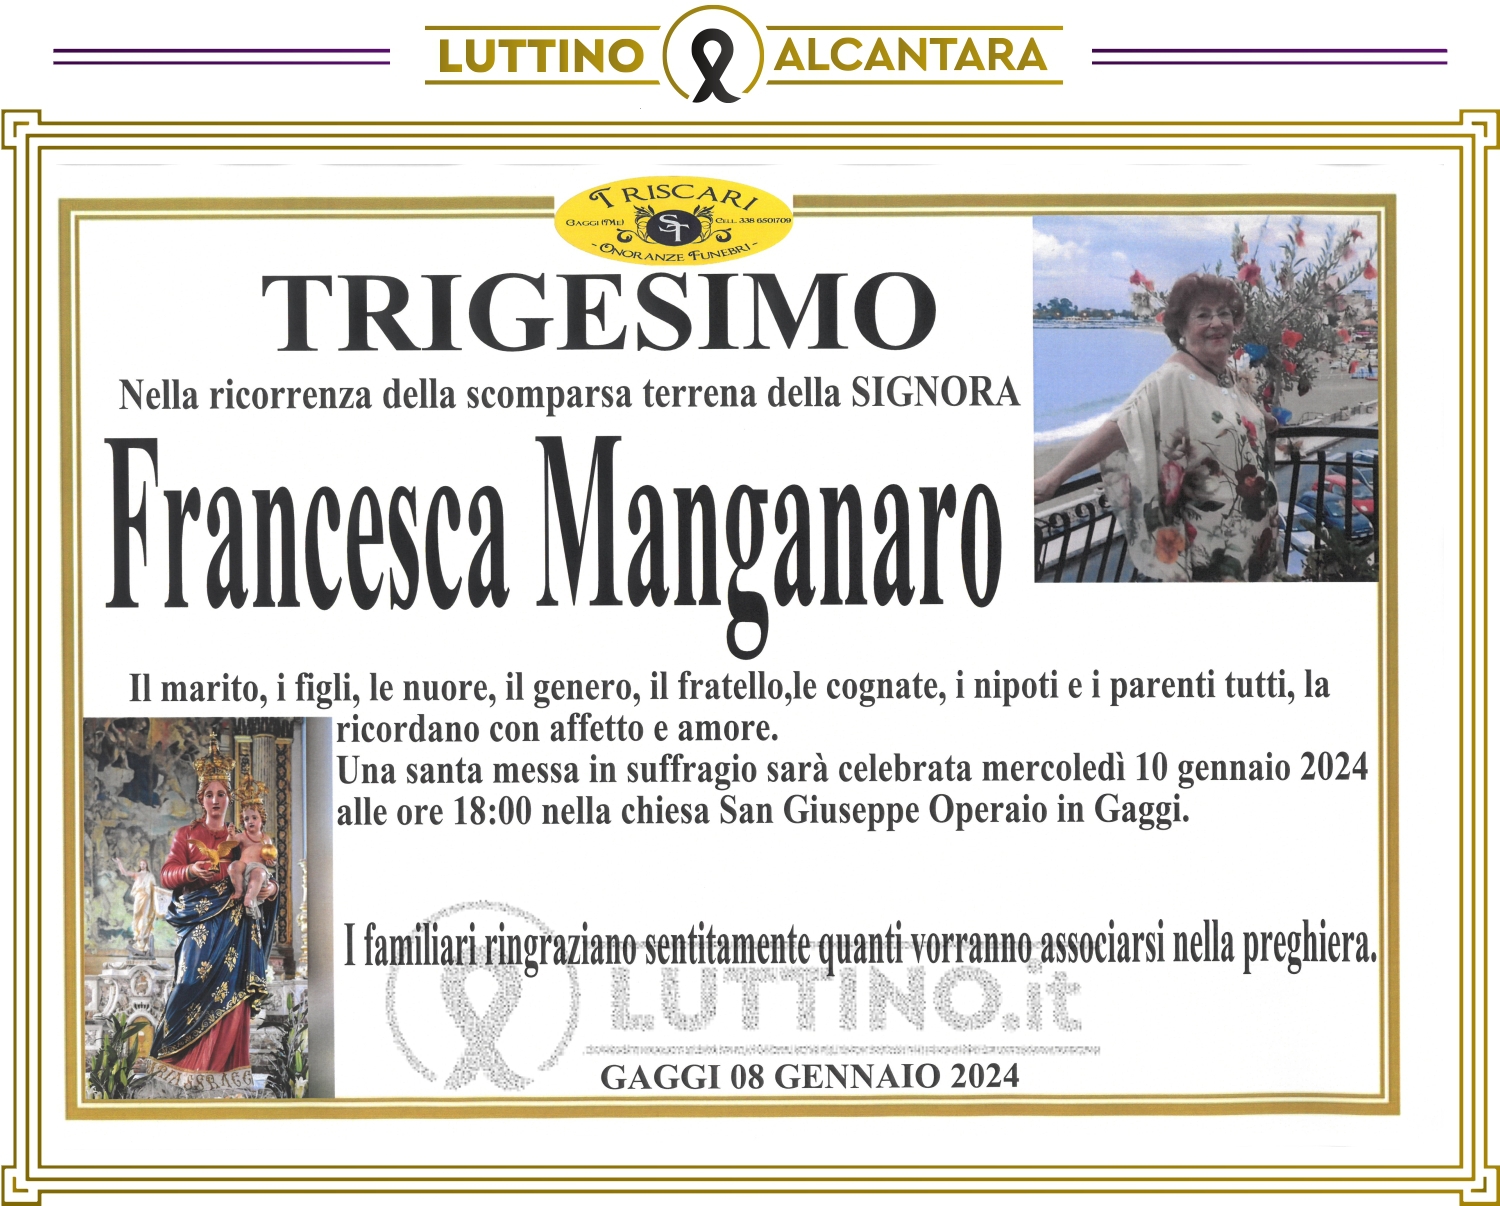 Francesca Manganaro